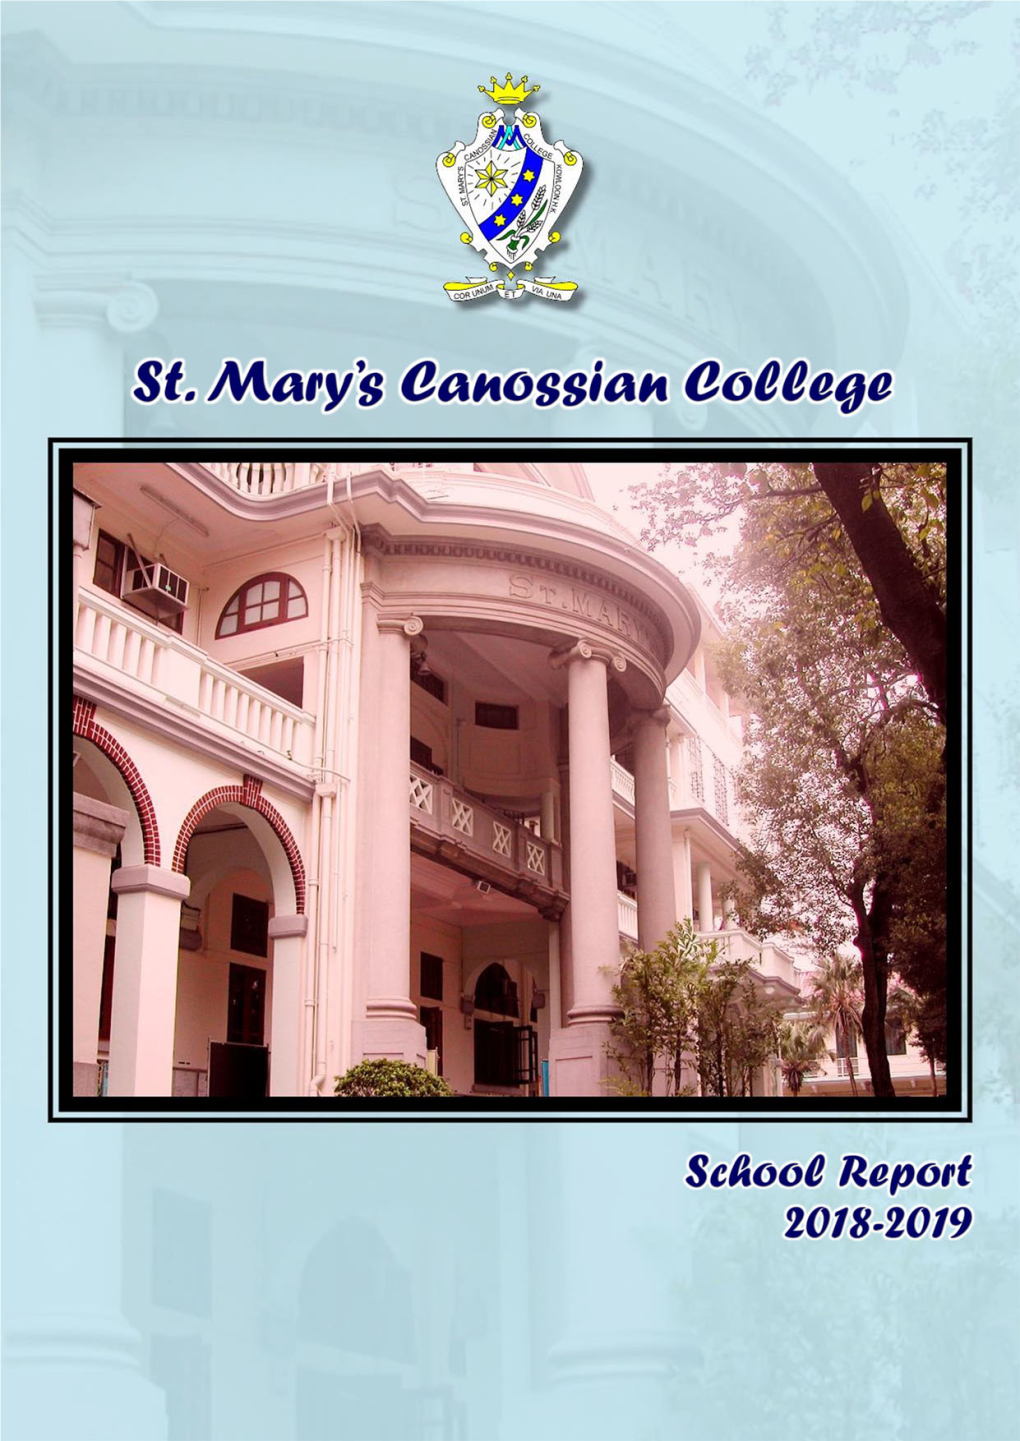 School Annual Report 2018-19